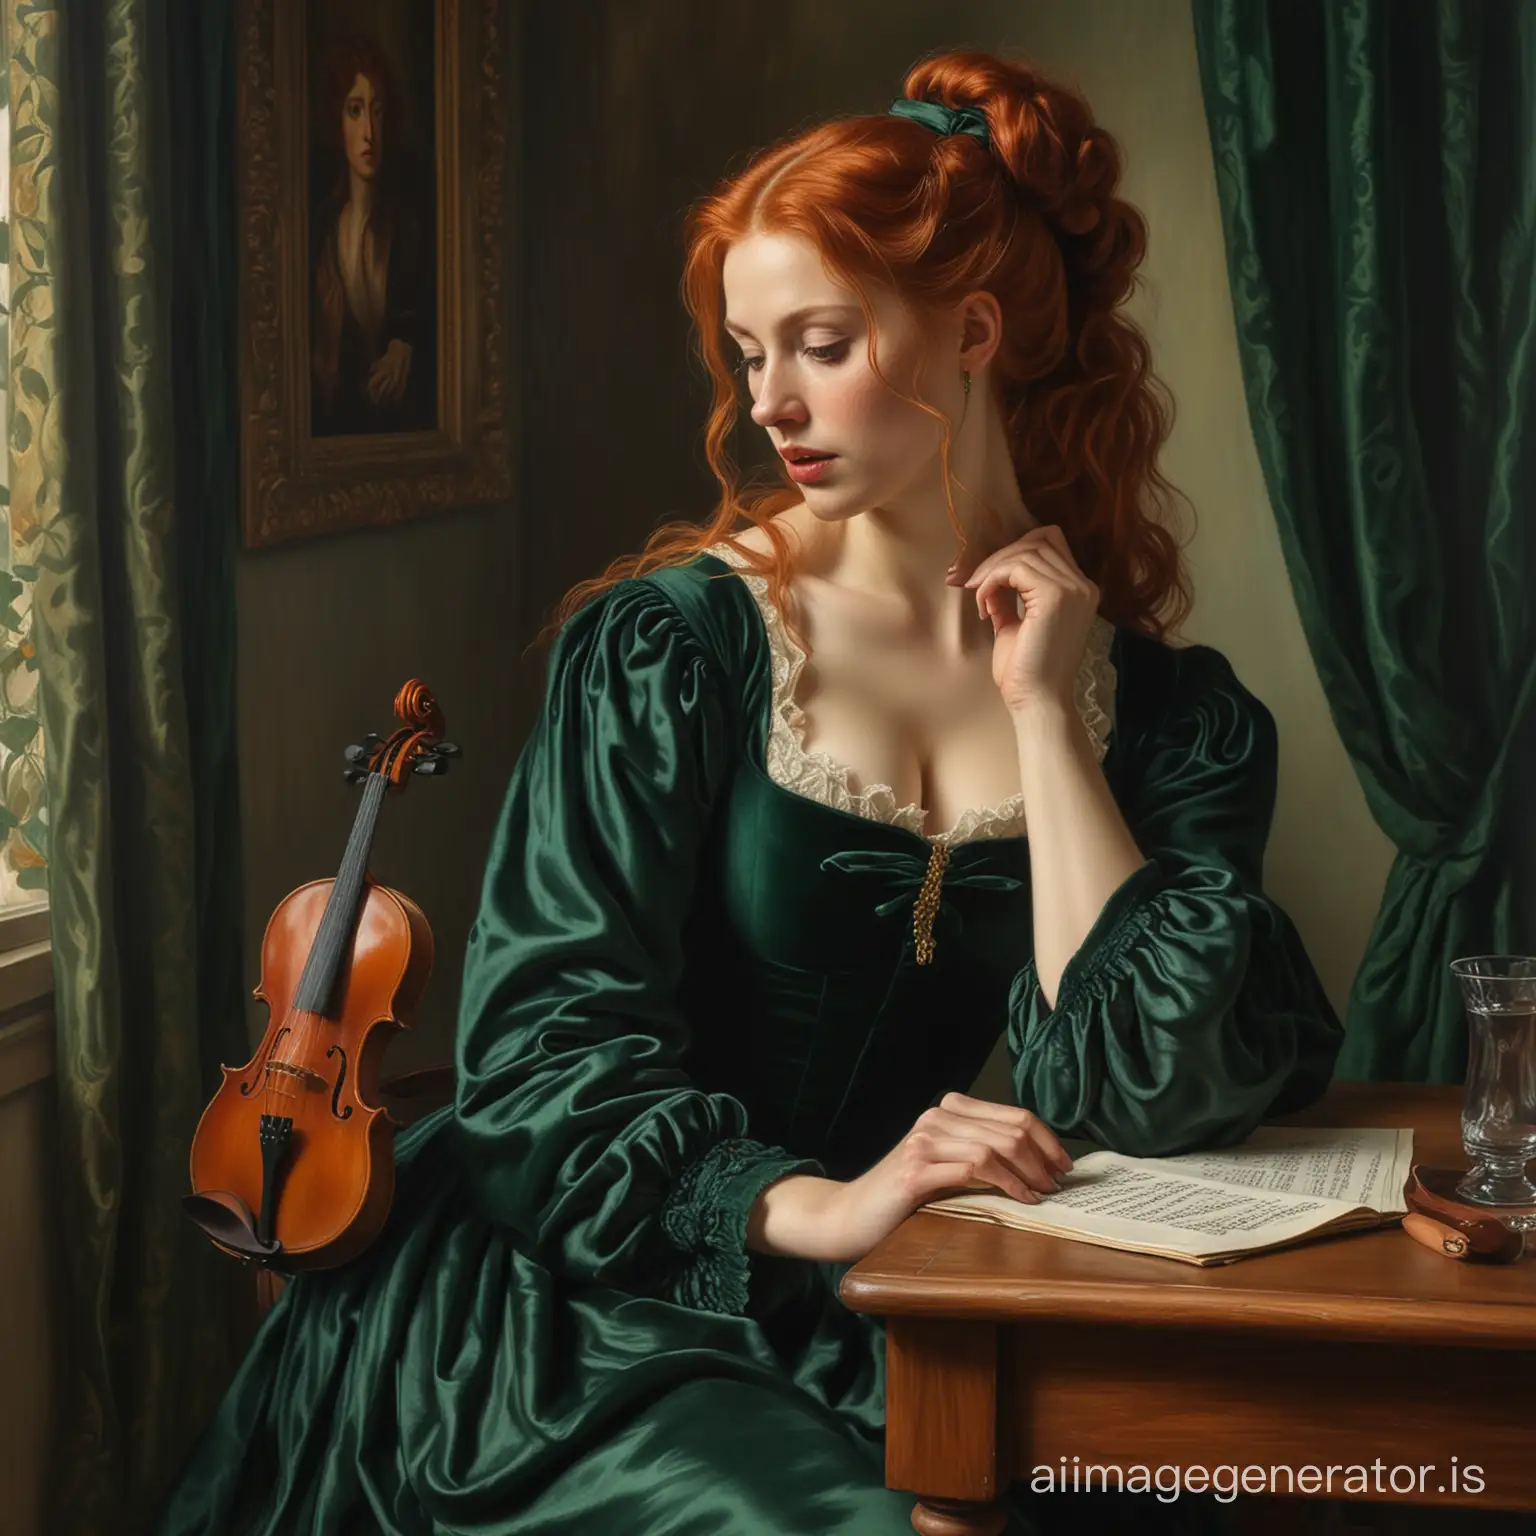 PreRaphaelite-Portrait-RedHaired-Woman-with-Violin